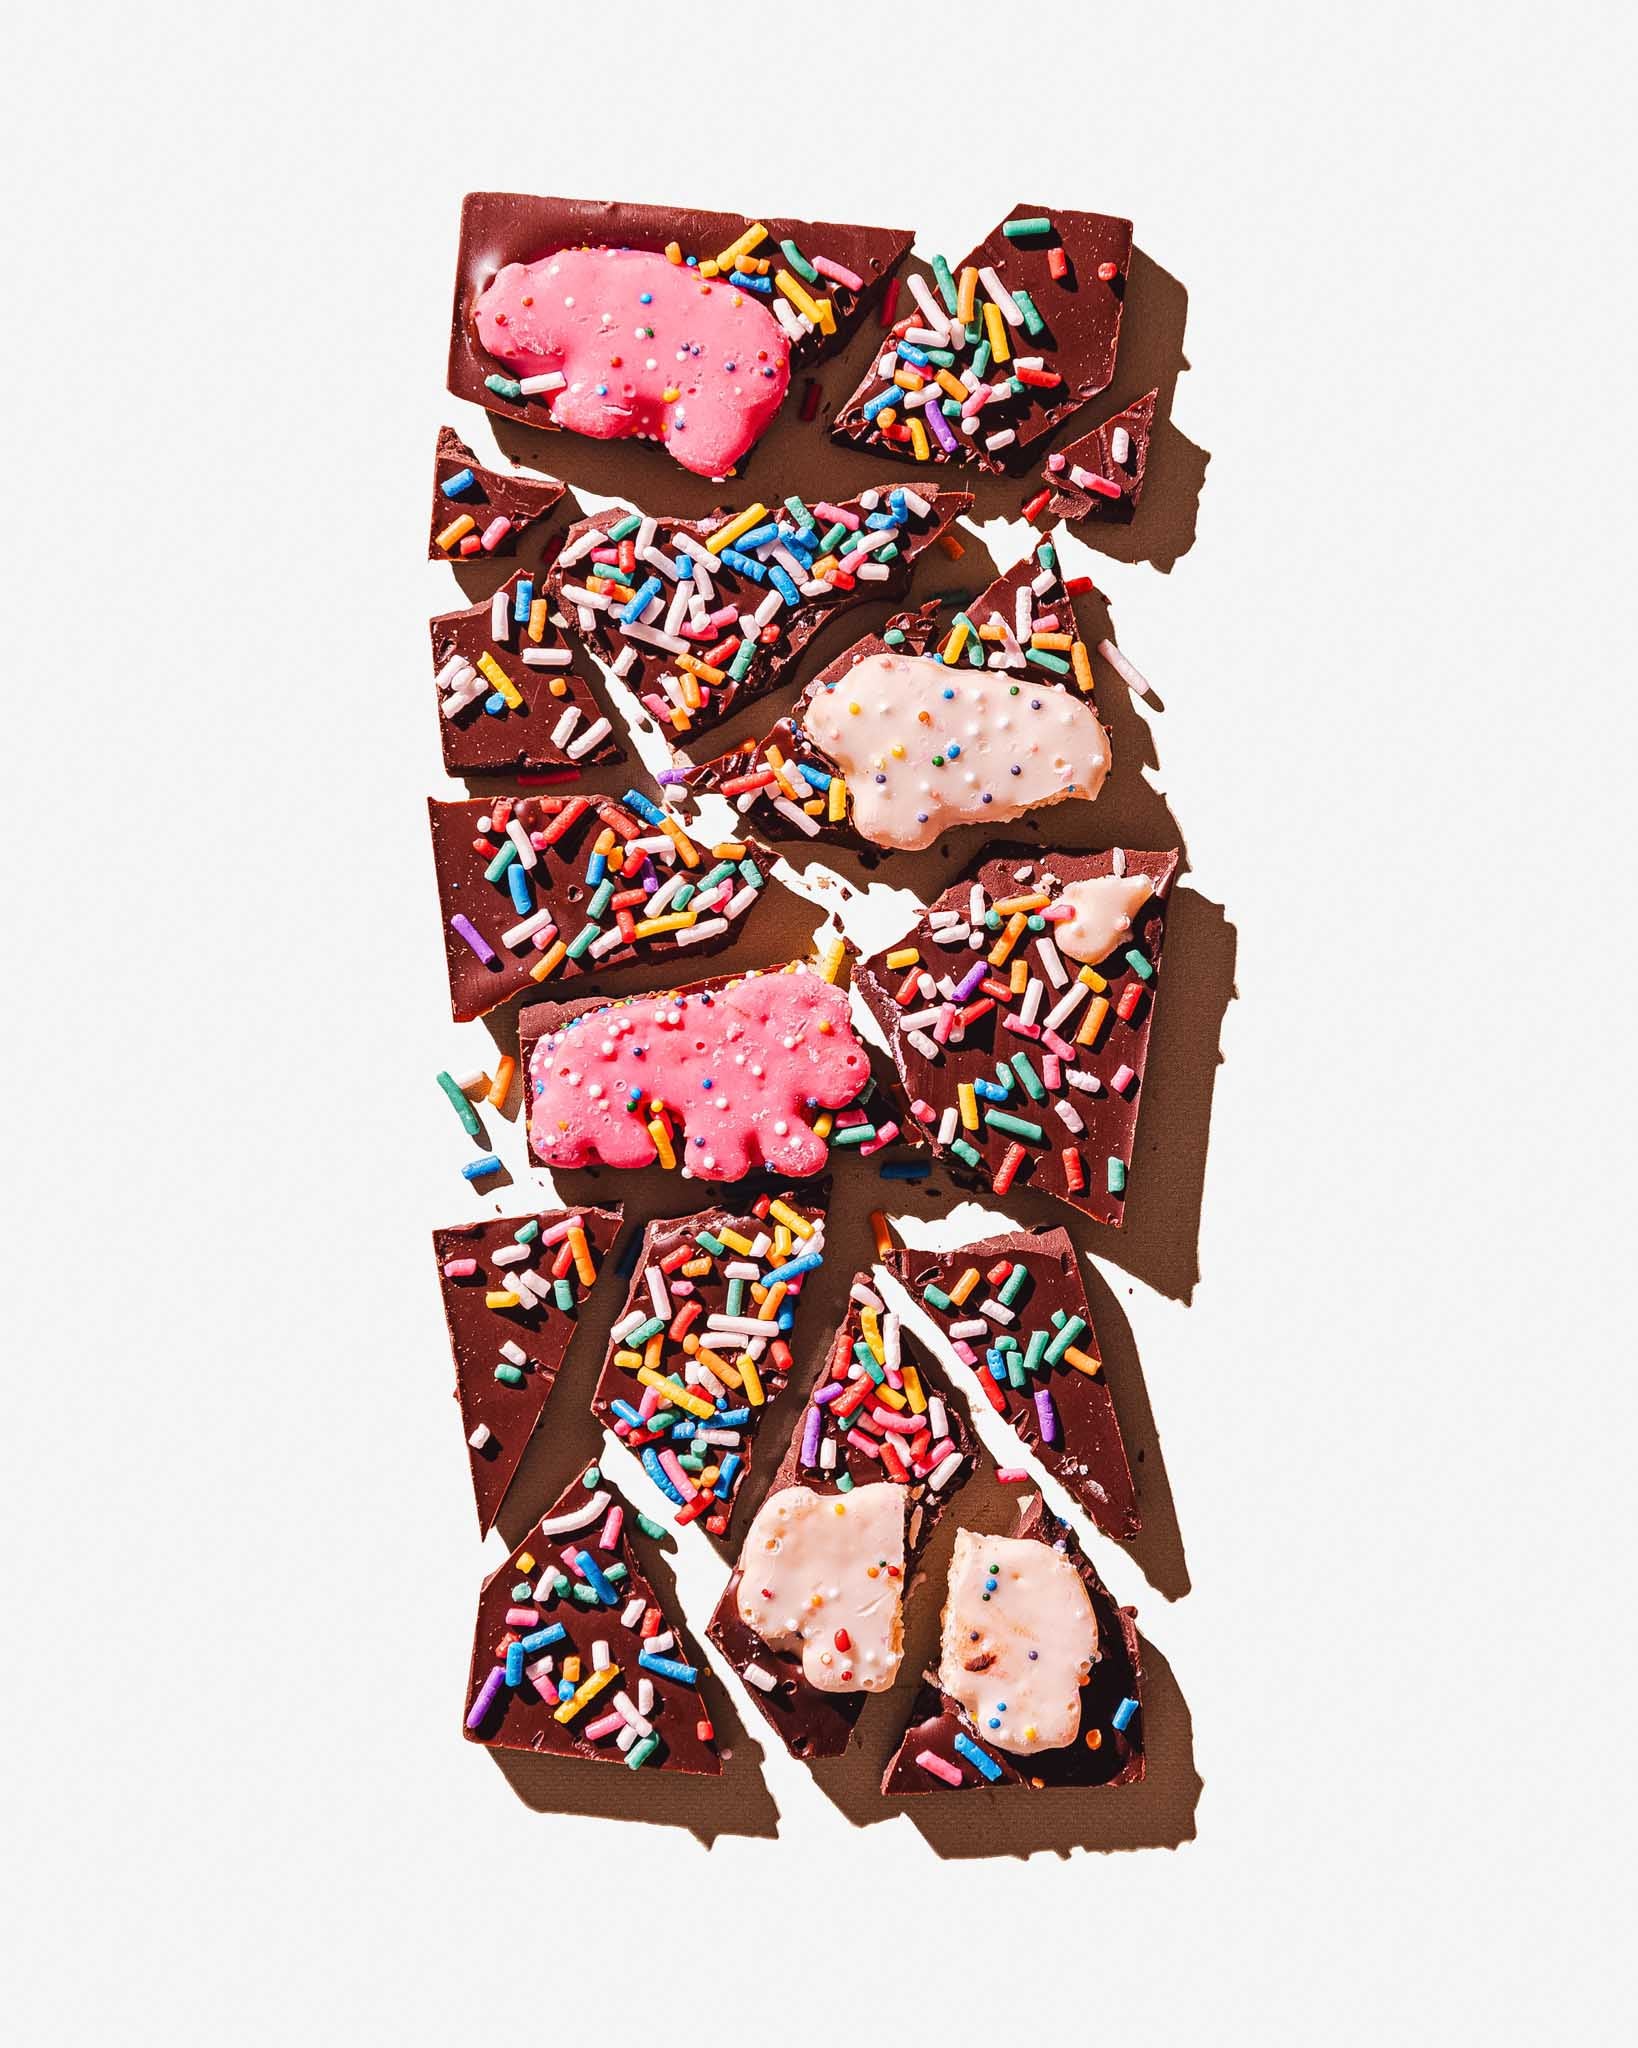 Gummy Sprinkles Chocolate Bar – Top This Chocolate